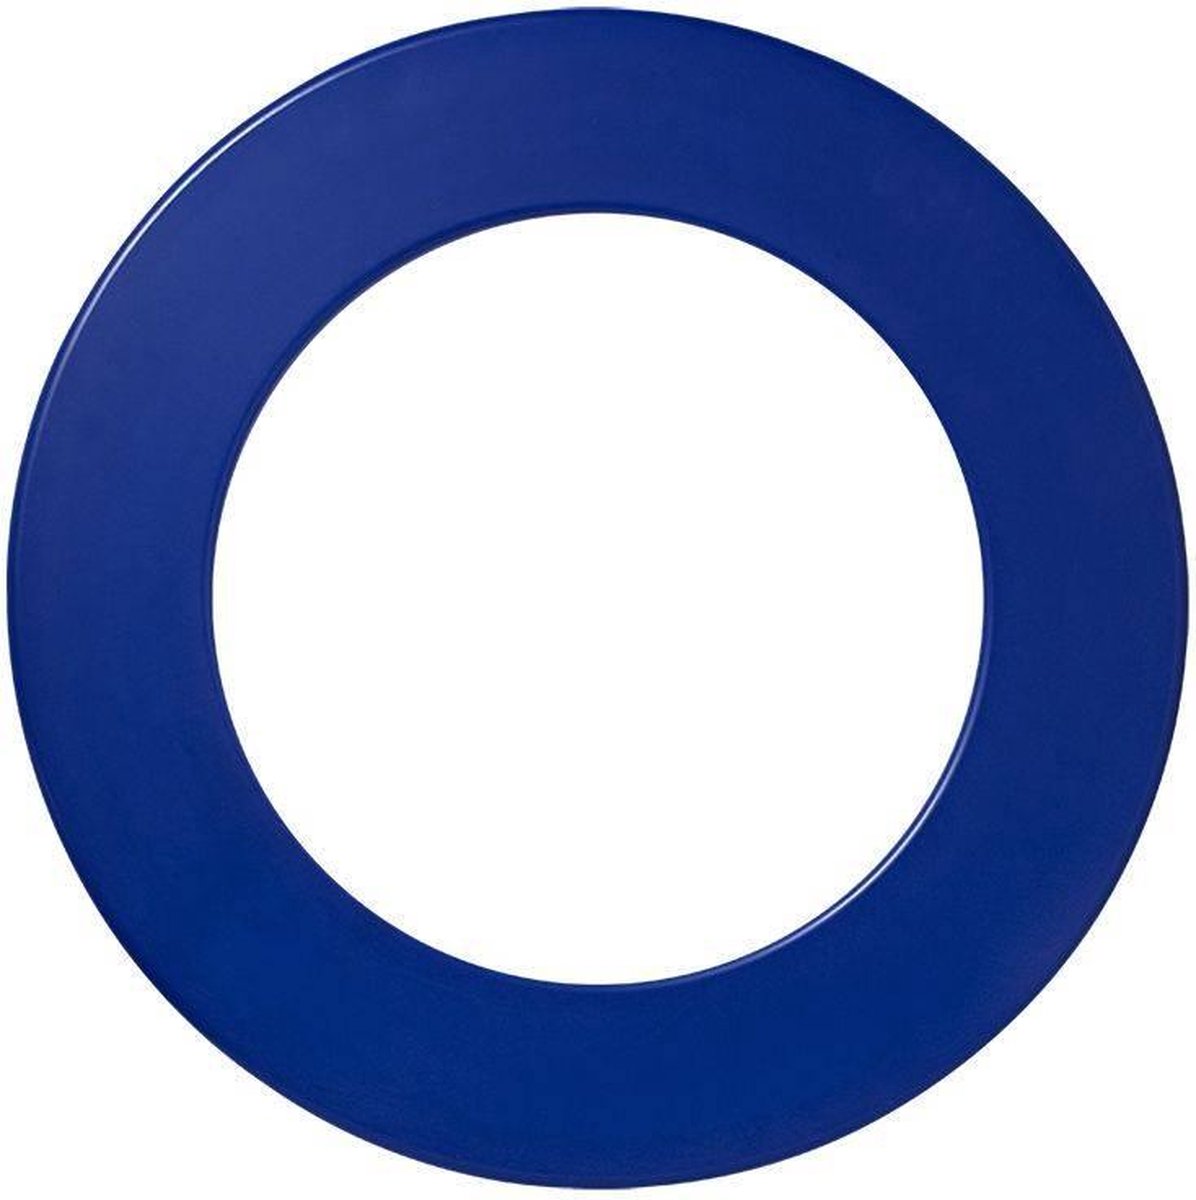 Winmau Dartbord Surround Ring - Plain blauw